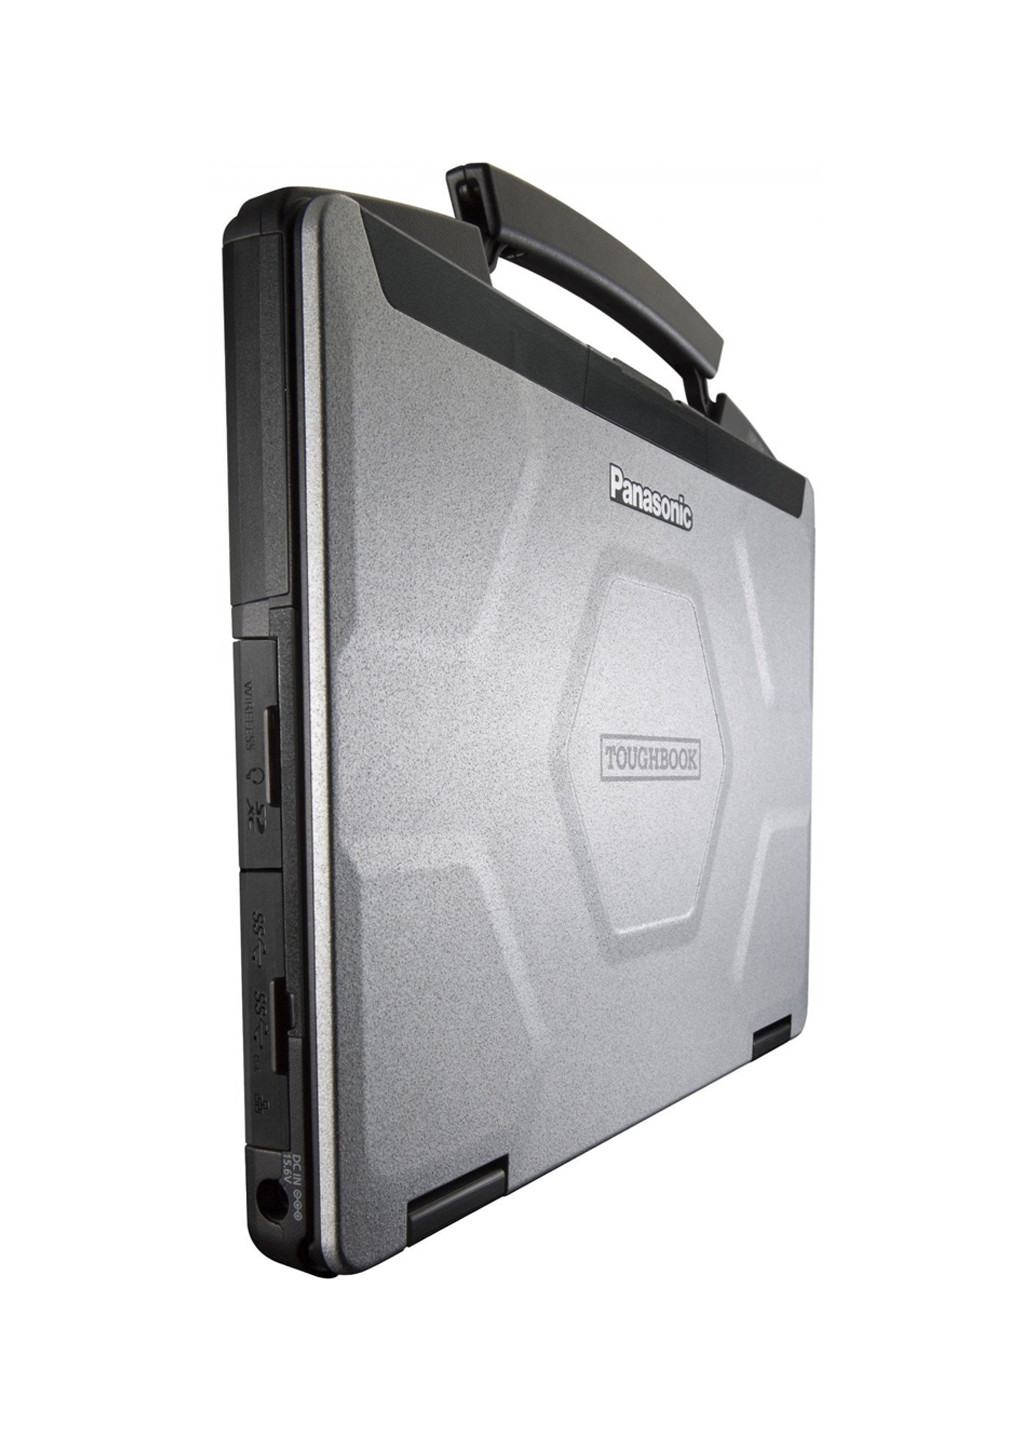 Ноутбук Panasonic toughbook cf-54 (cf-54g0486t9) black (136402612)